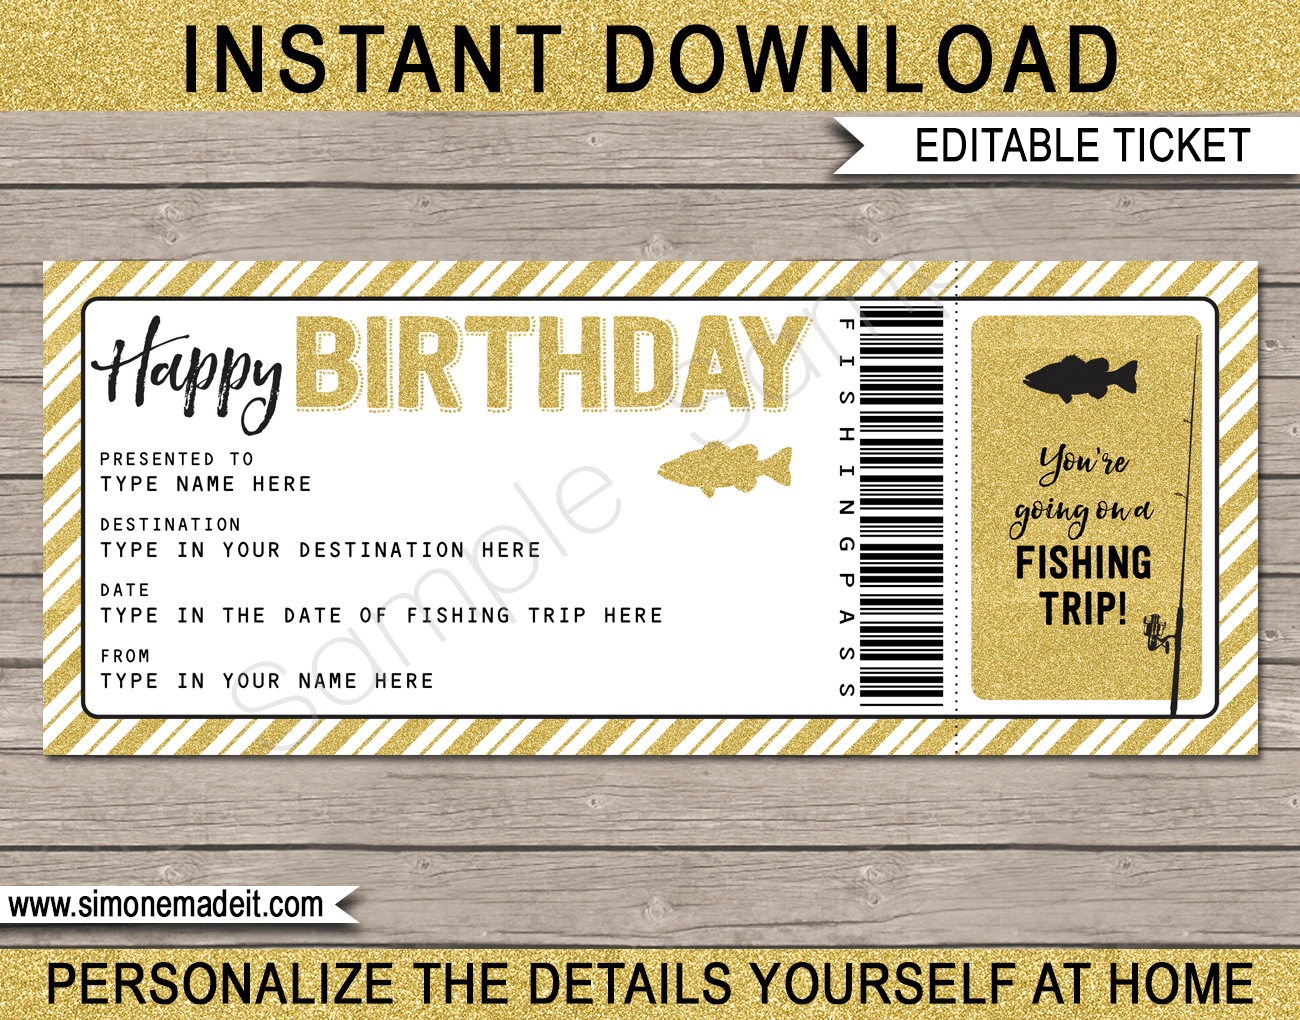 printable-concert-ticket-template-birthday-gift-voucher-surprise